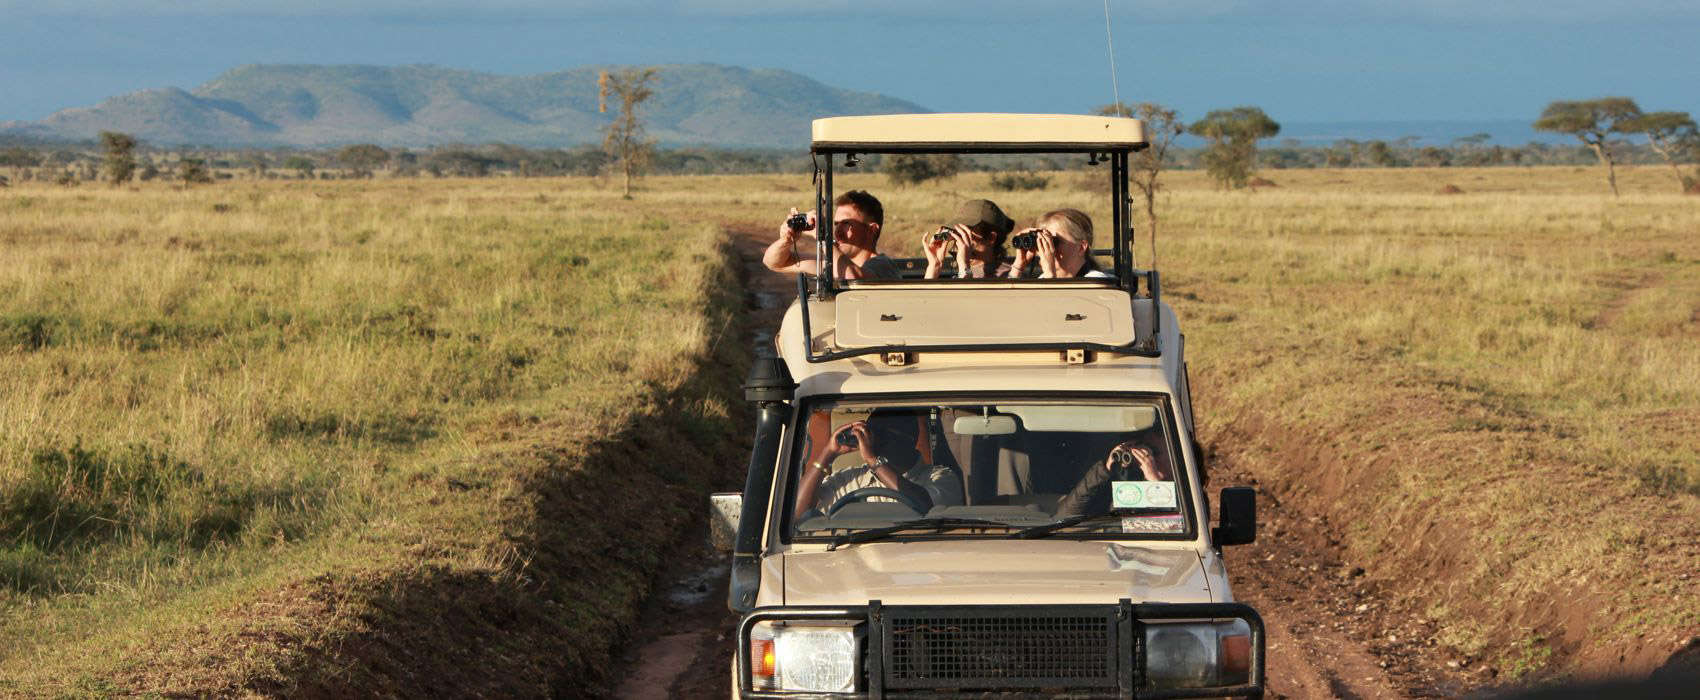 African Serengeti National Park Safari car